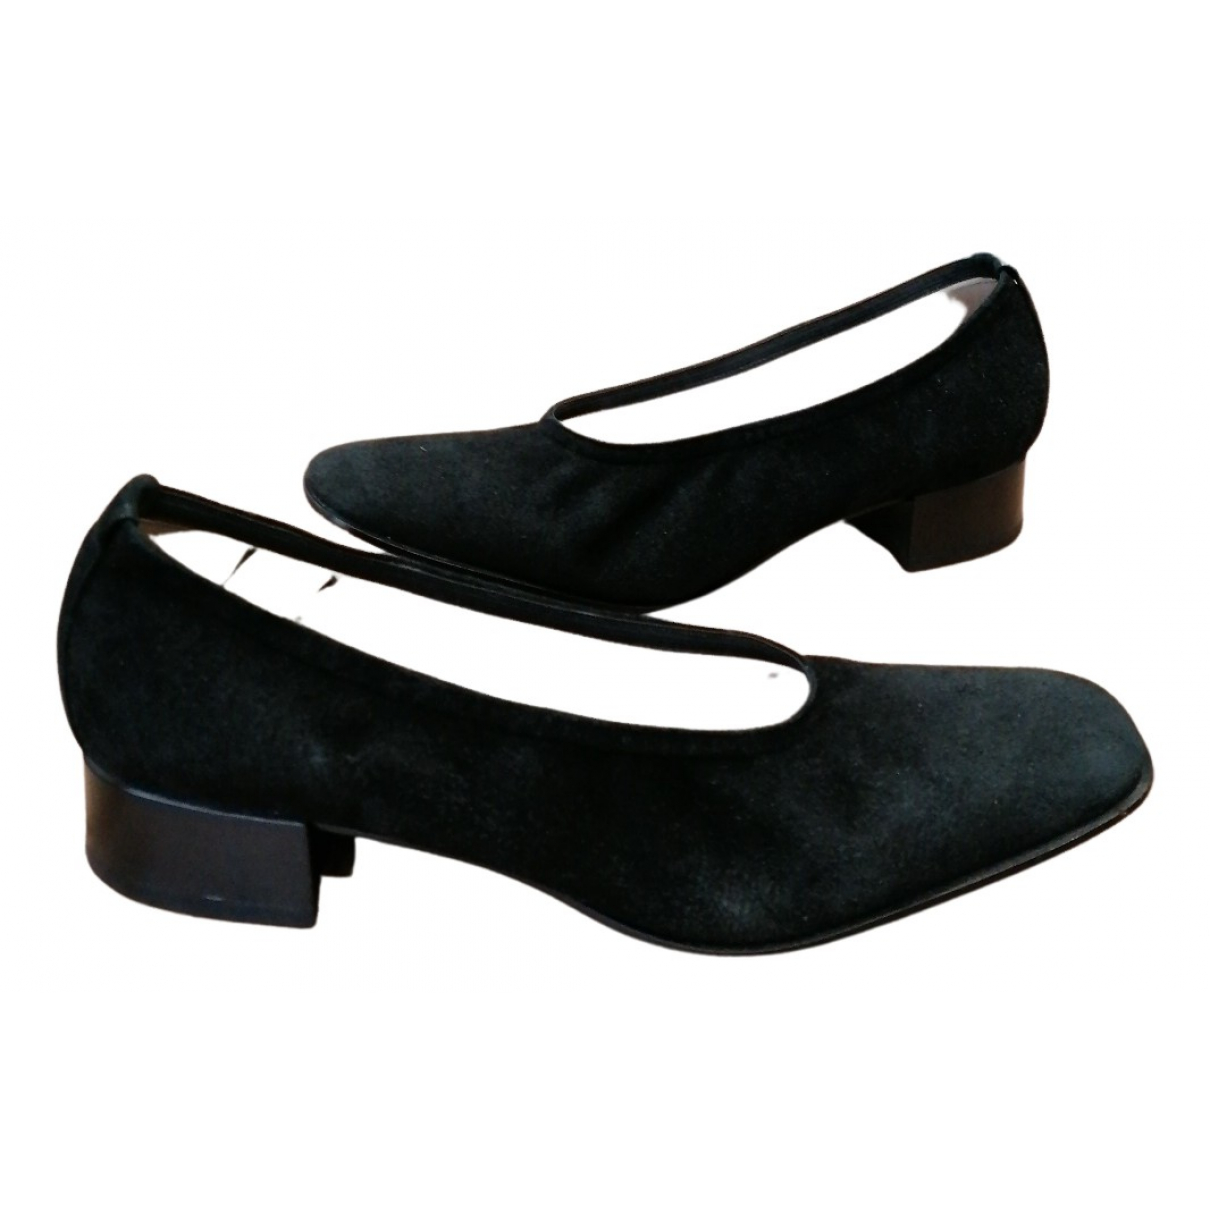 Popular products Philadelphia Mall Leather heels